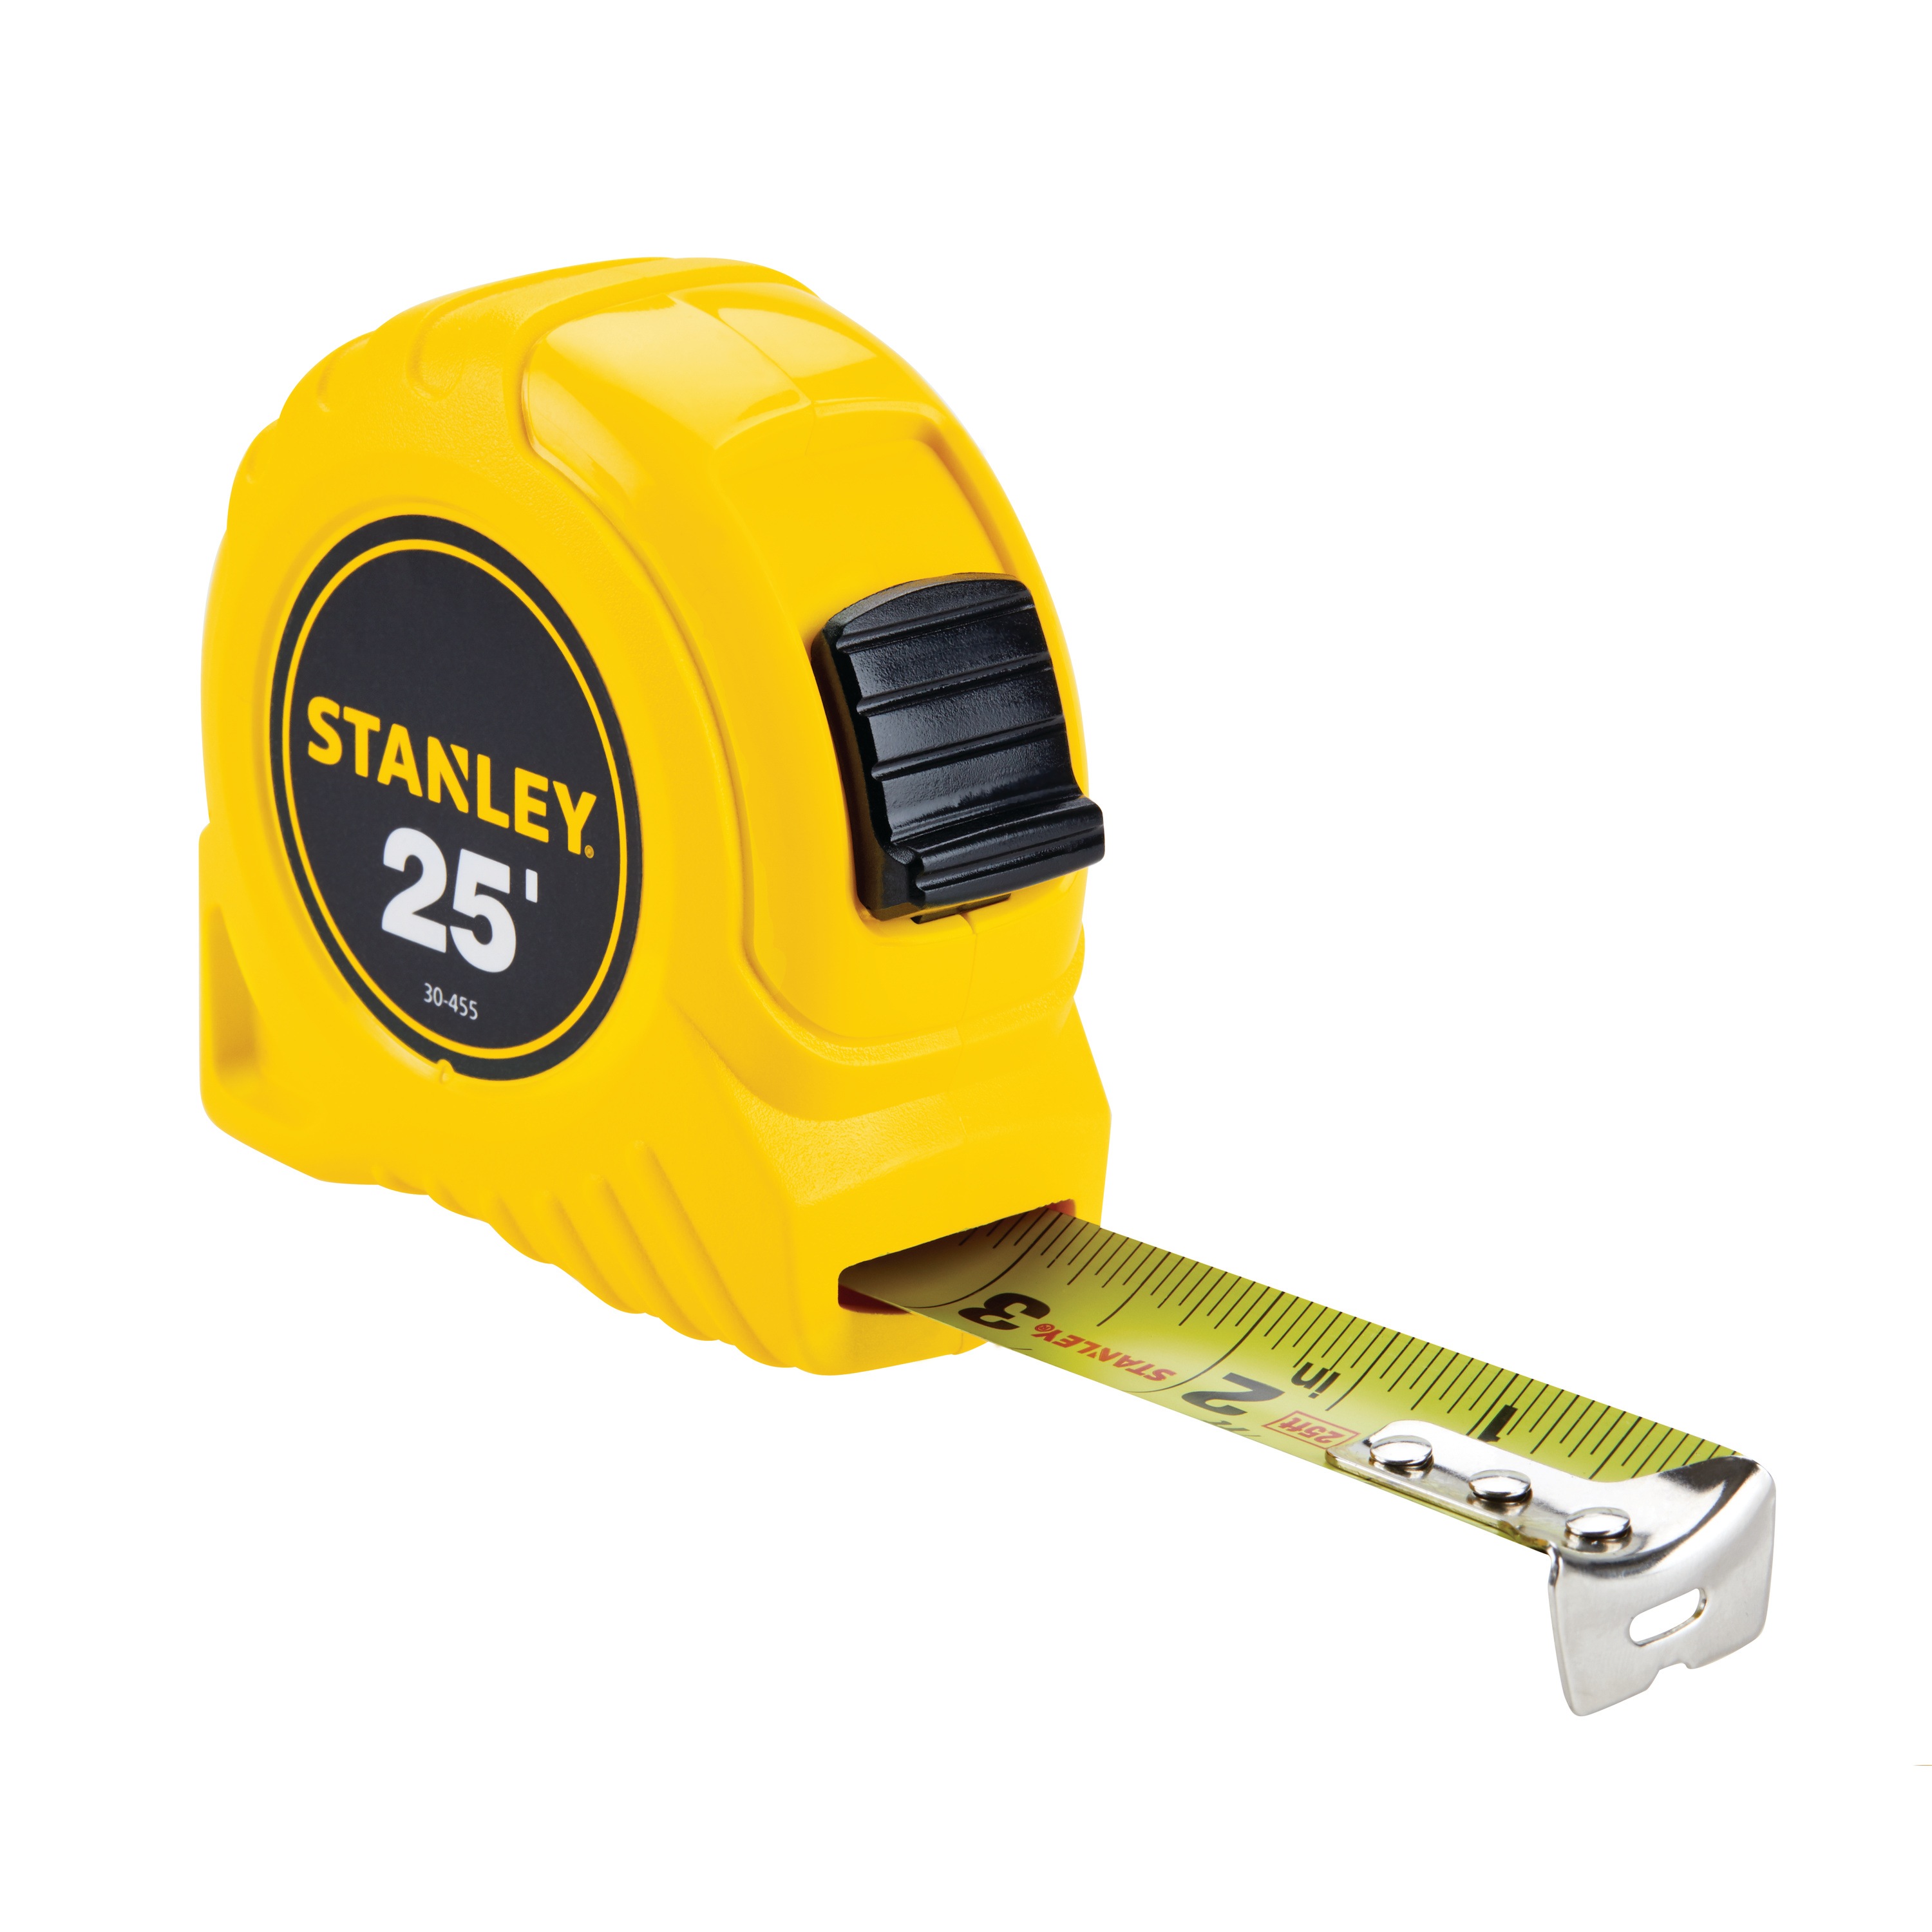 Stanley Tools - 25 ft Tape Measure - 30-455